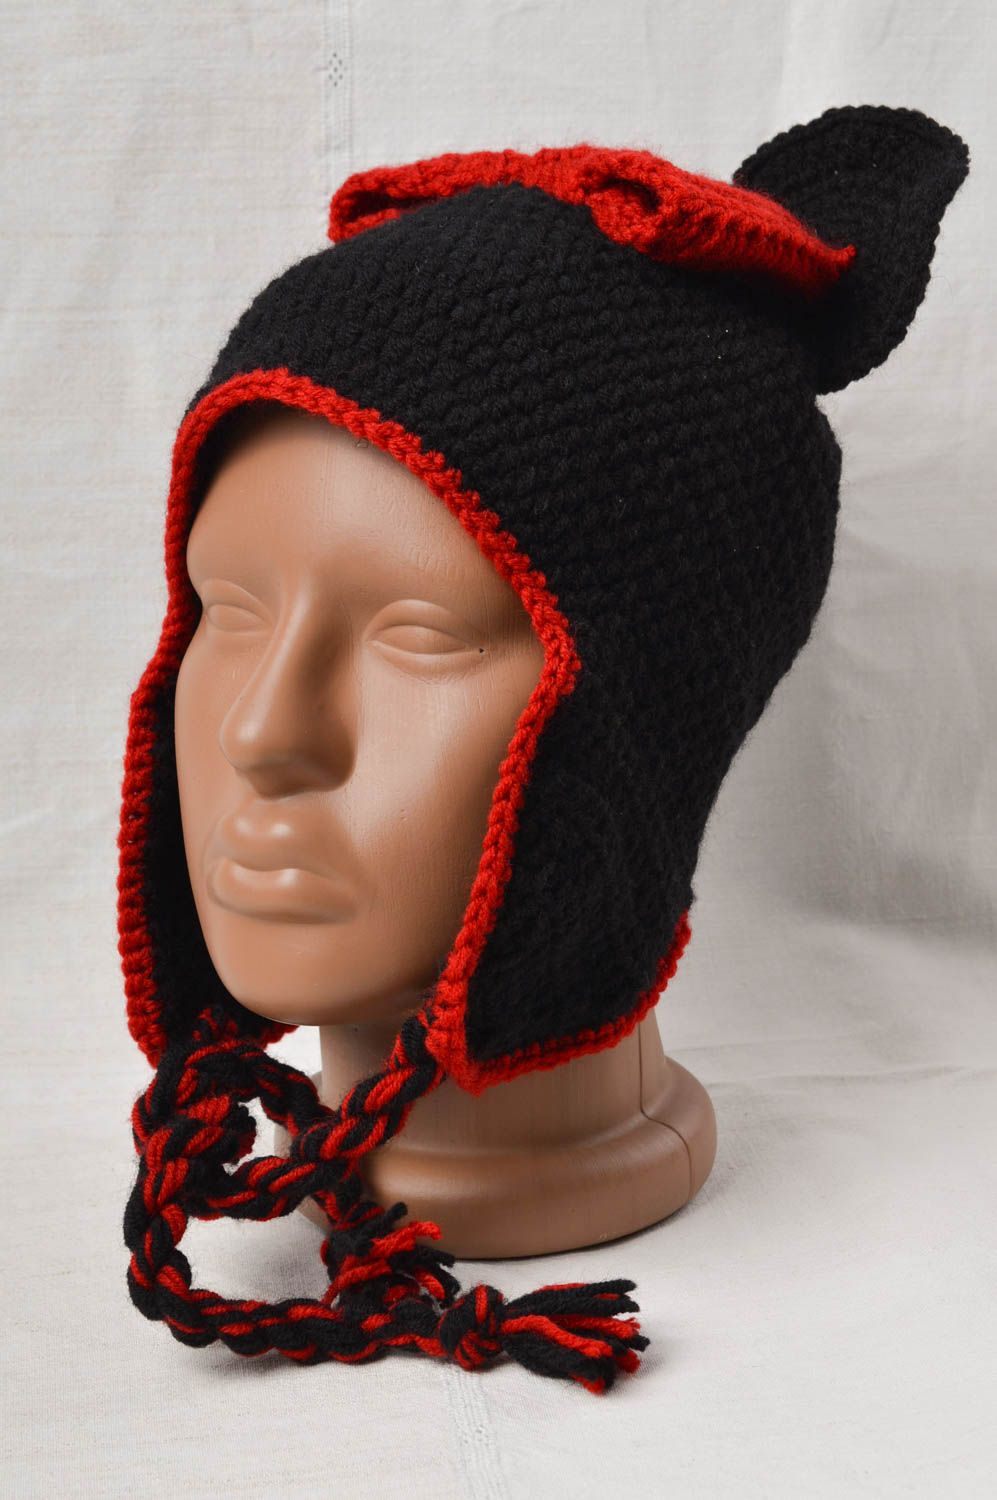 Beauiful handmade crochet hat winter head accessories for kids gift ideas photo 2